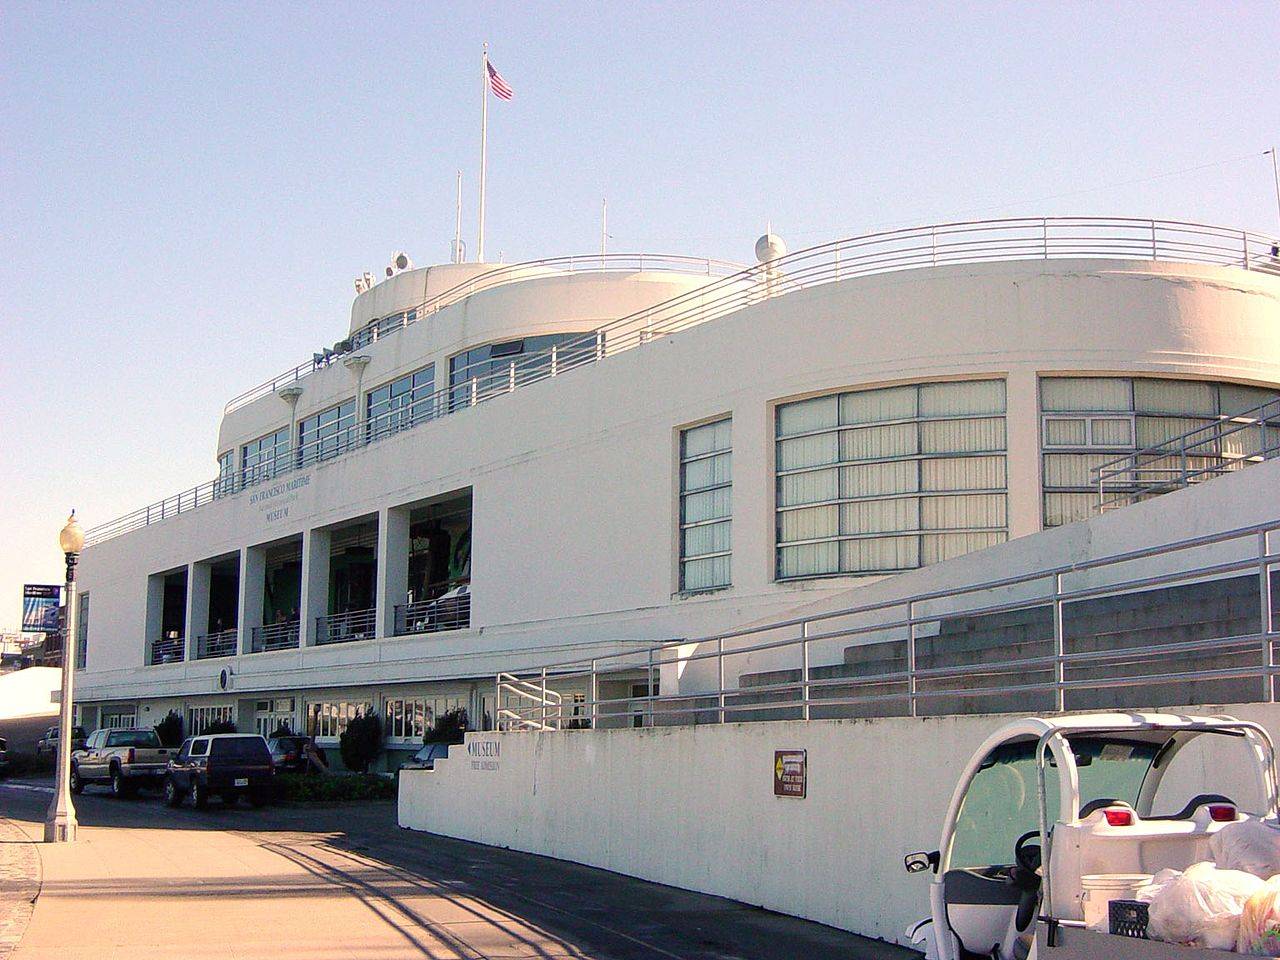 San Francisco Maritime museum 